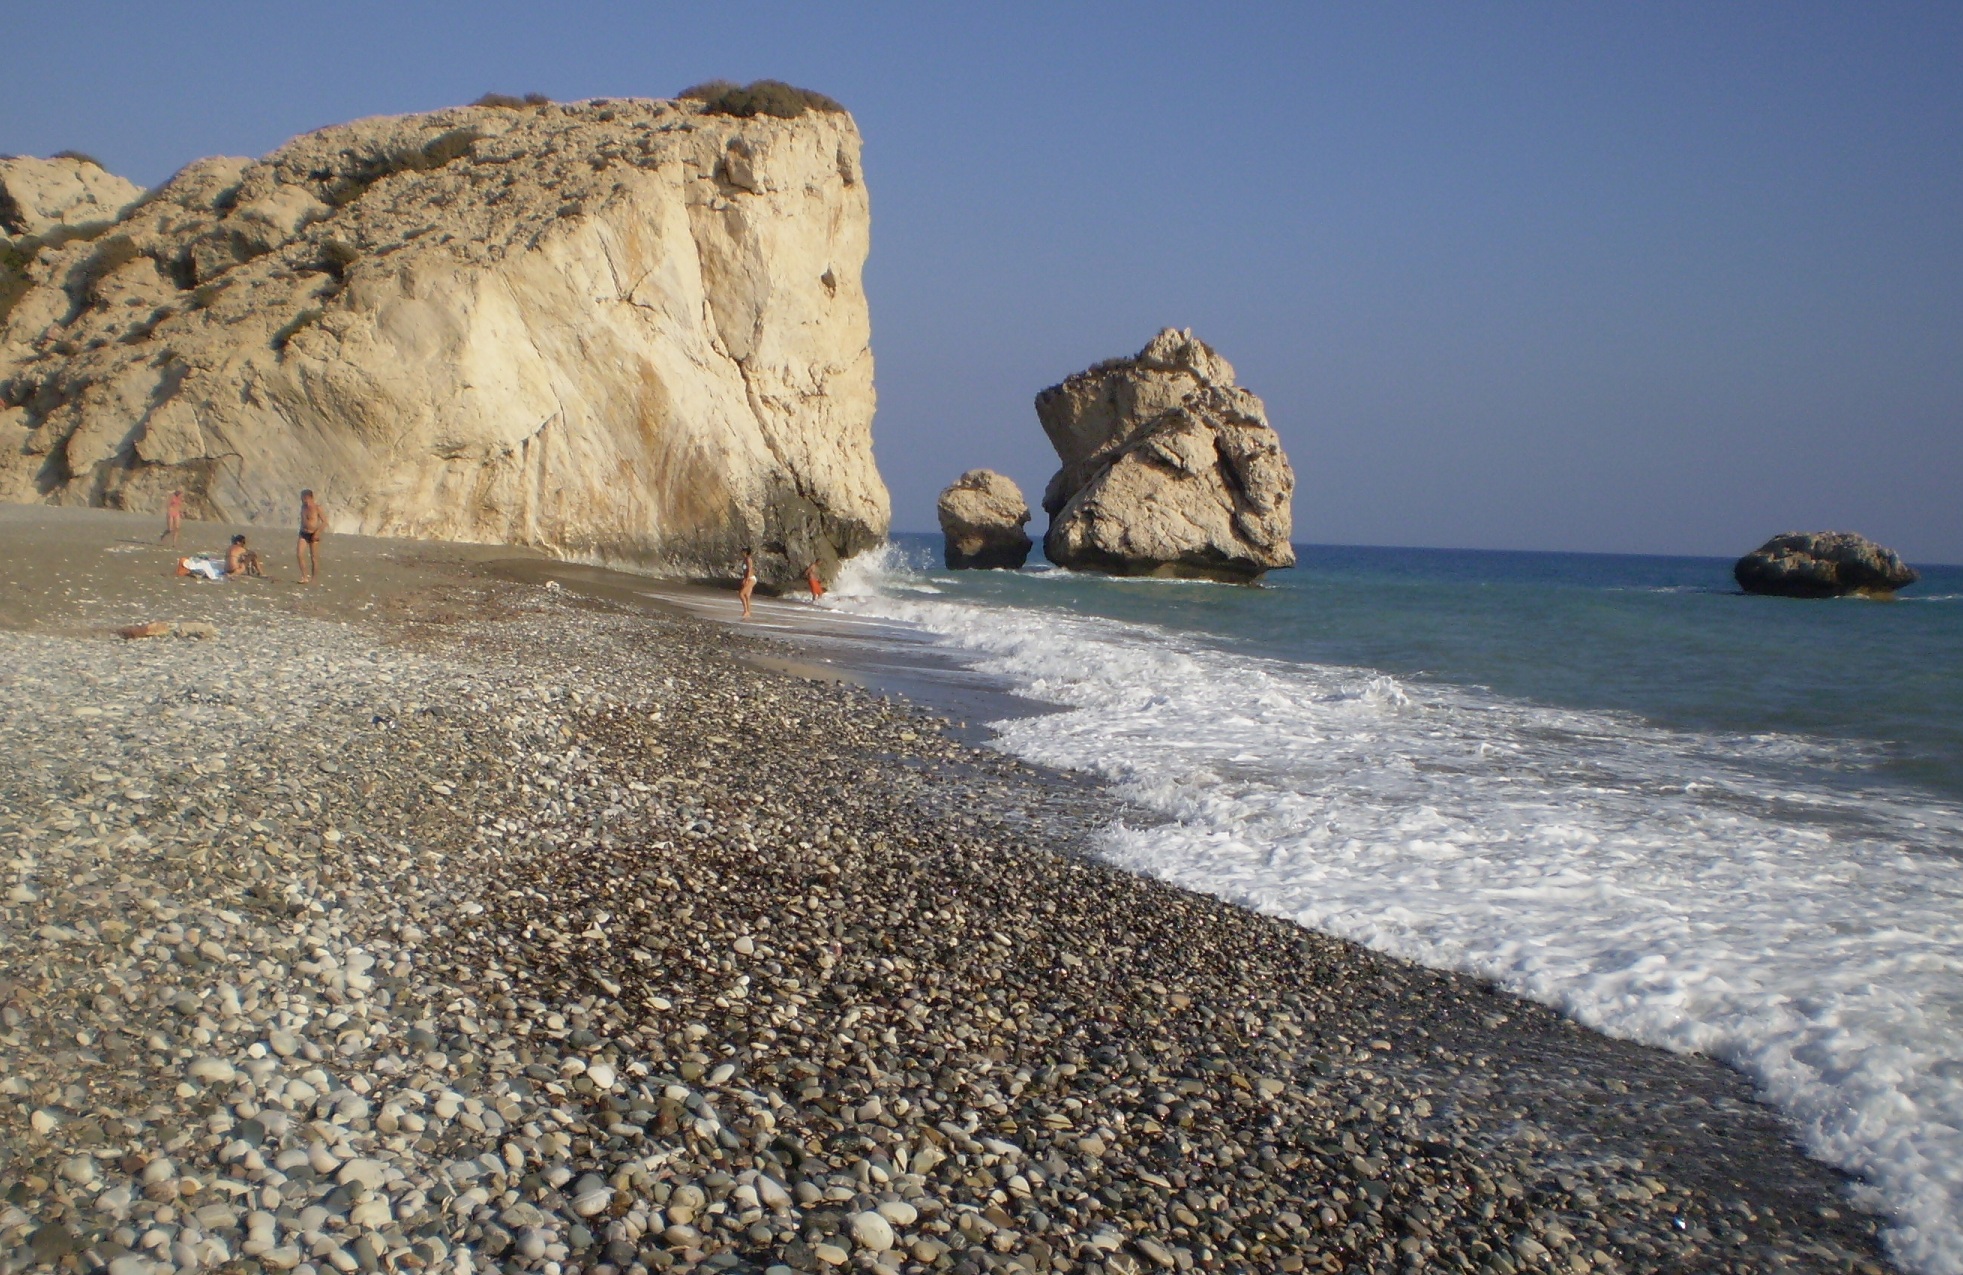 Greek Mythology Places in Cyprus